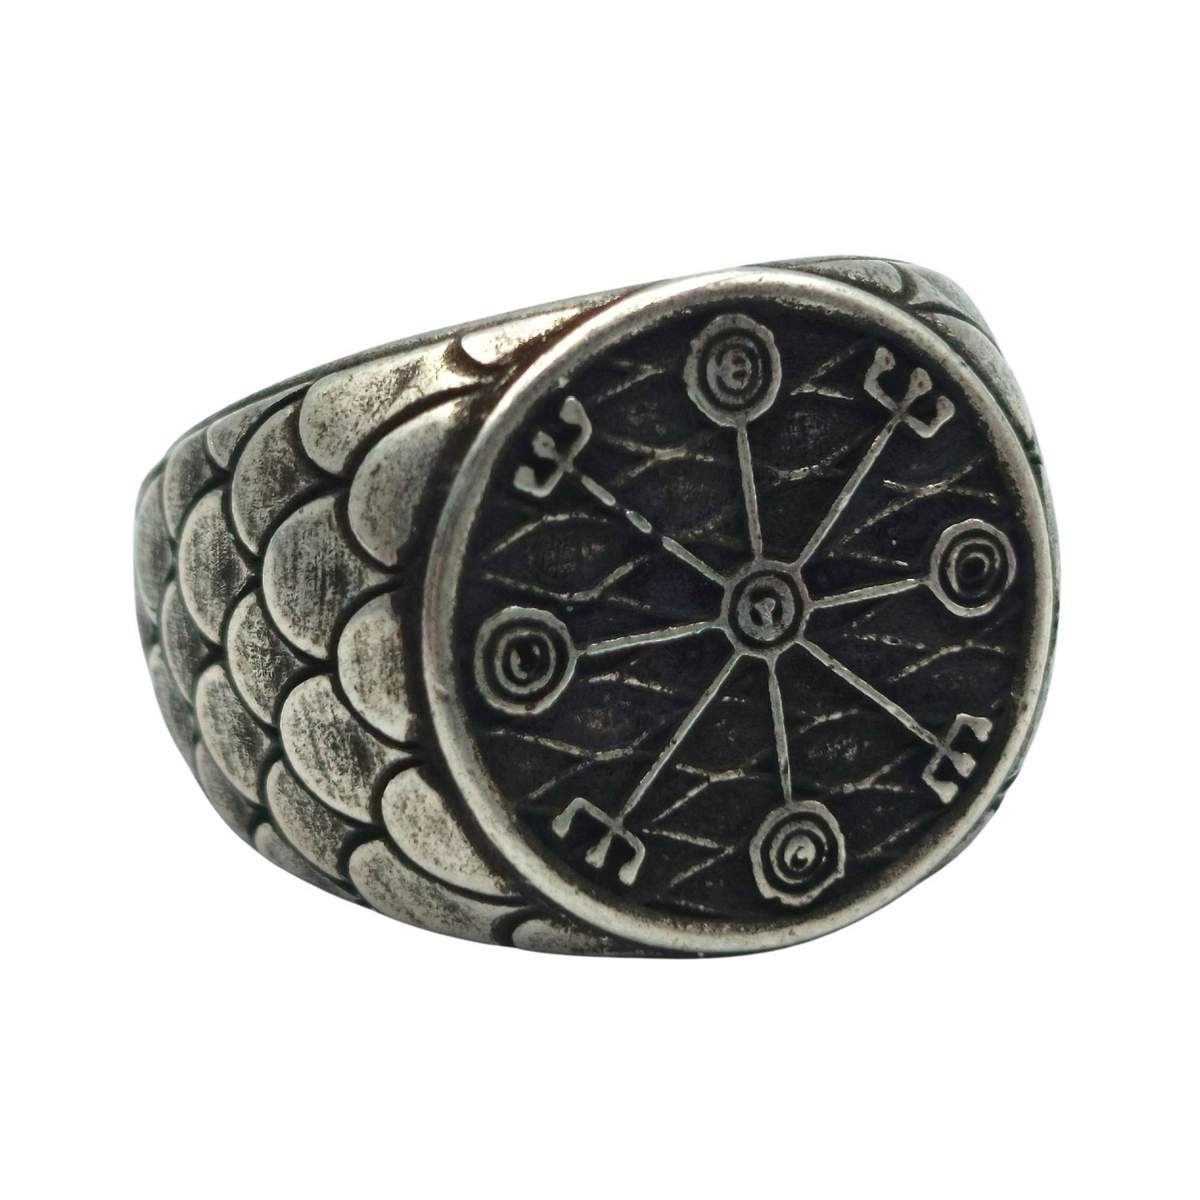 Veidistafur stave ring from bronze